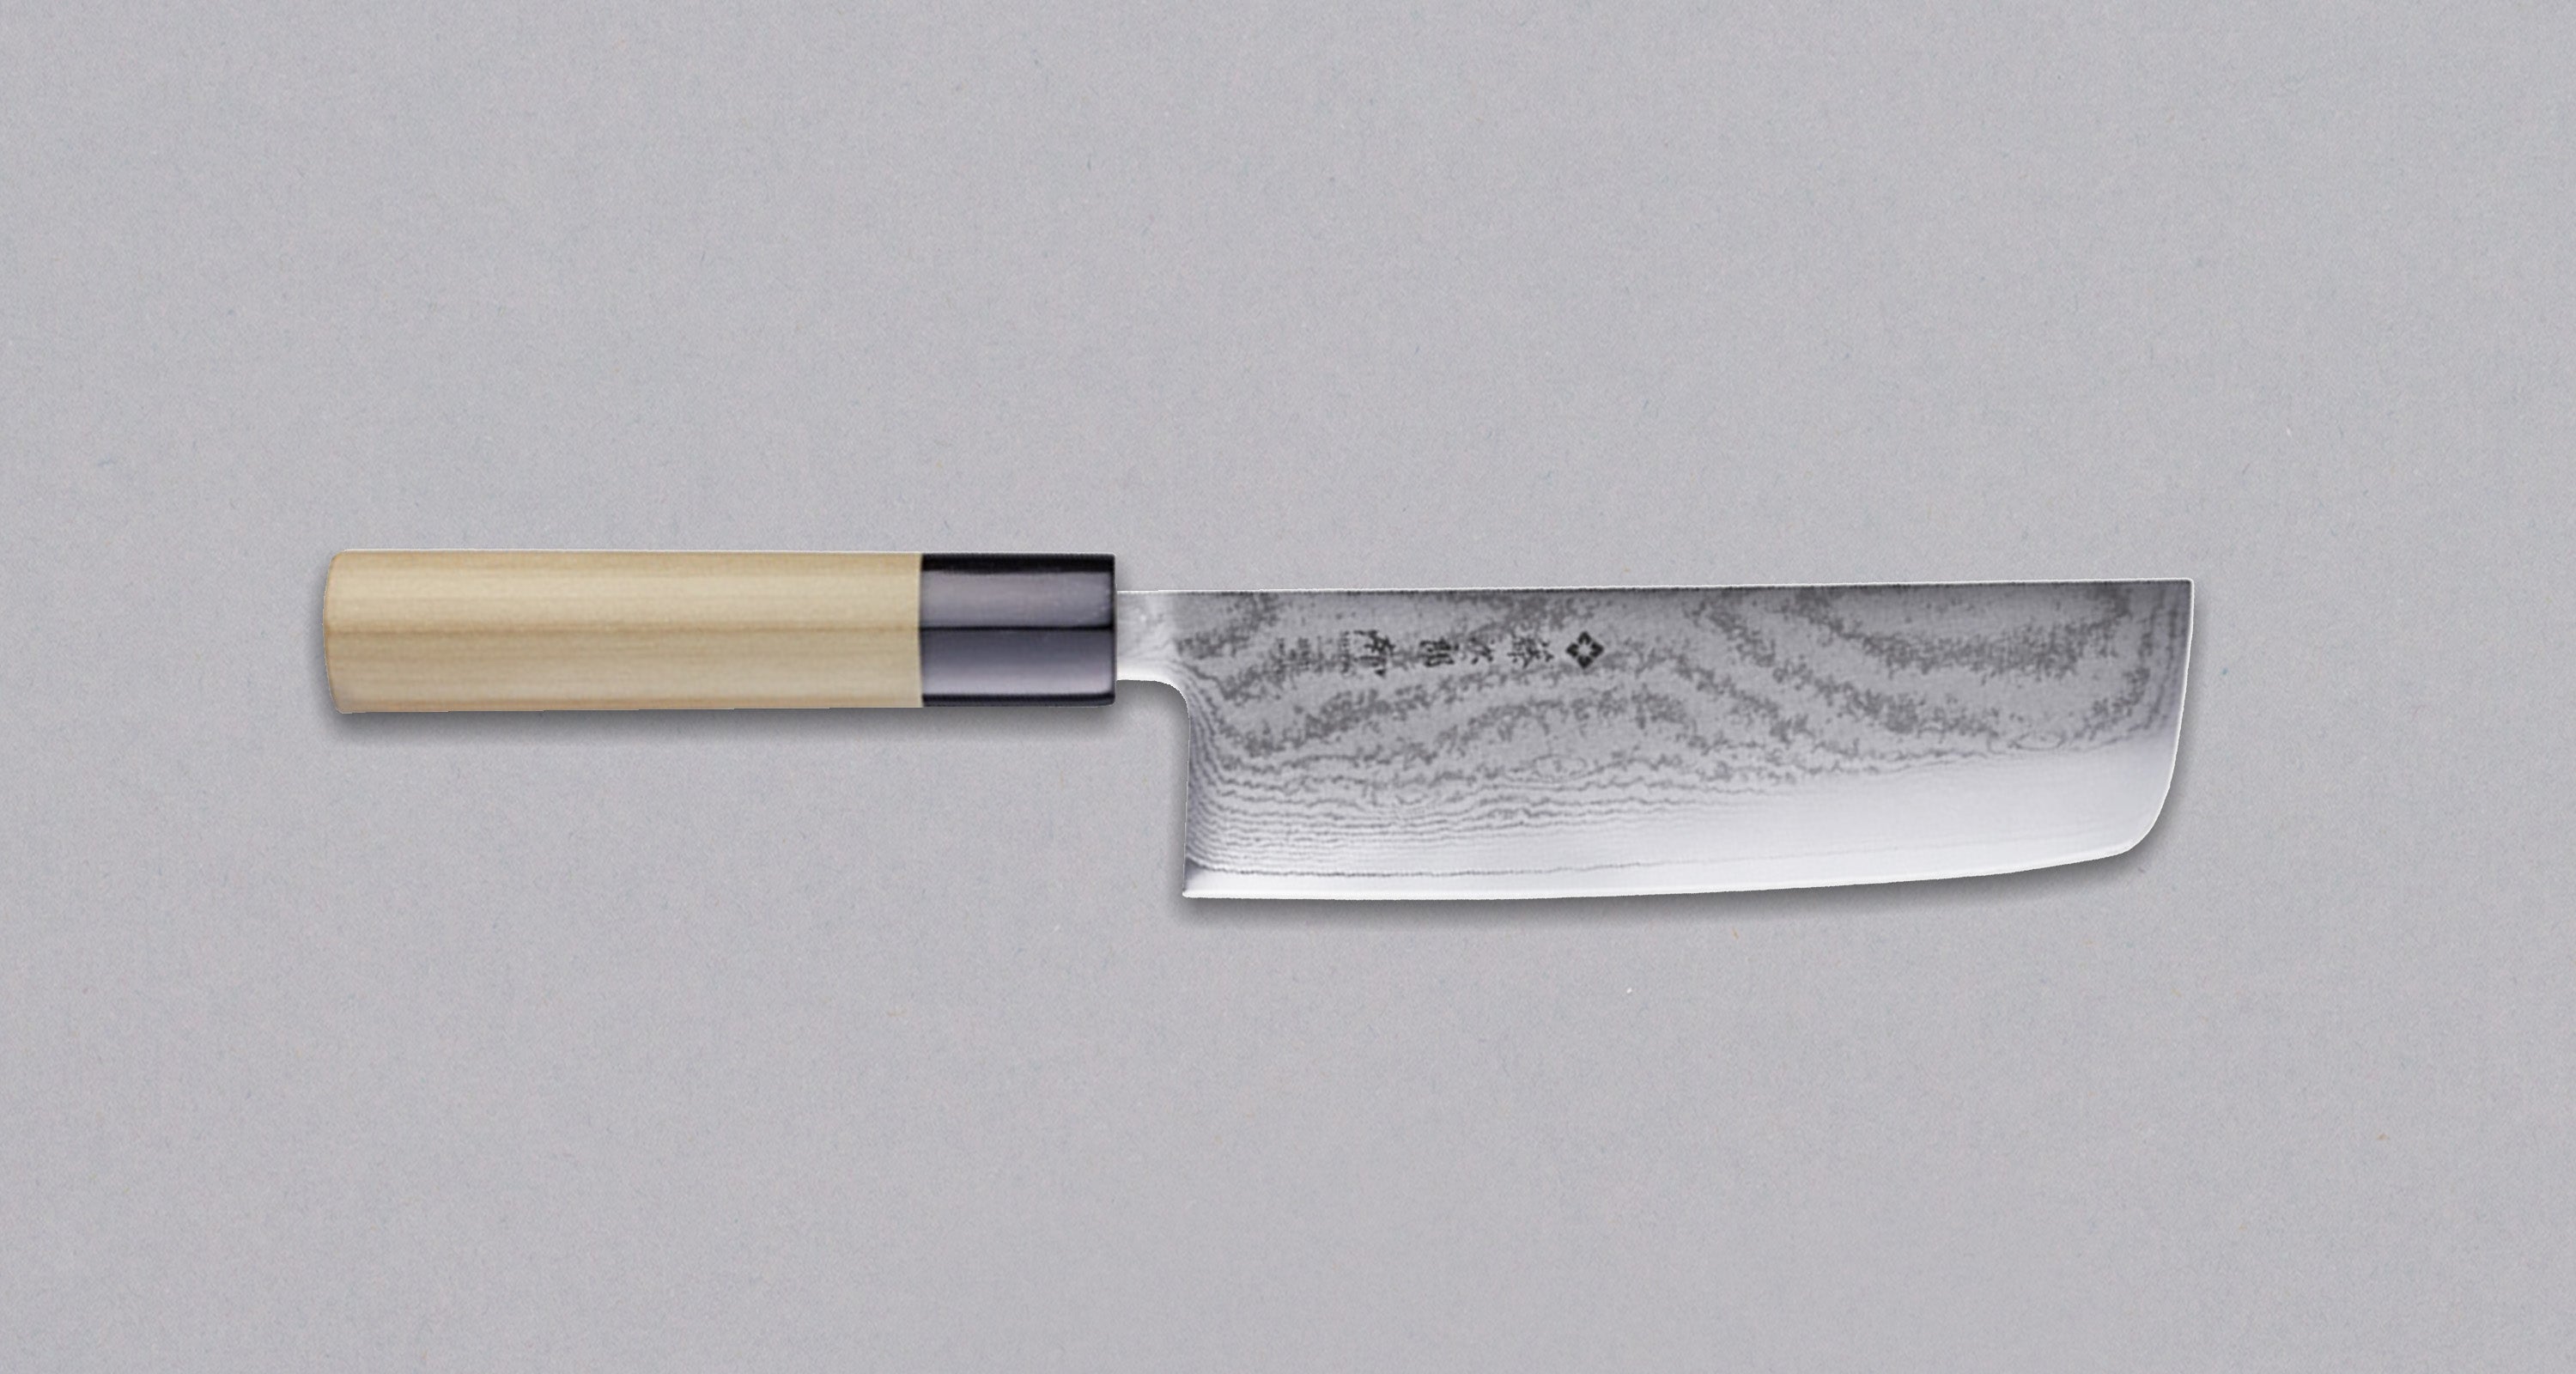 Leather Saya Nakiri [knife sheath] - 180mm (7.1)